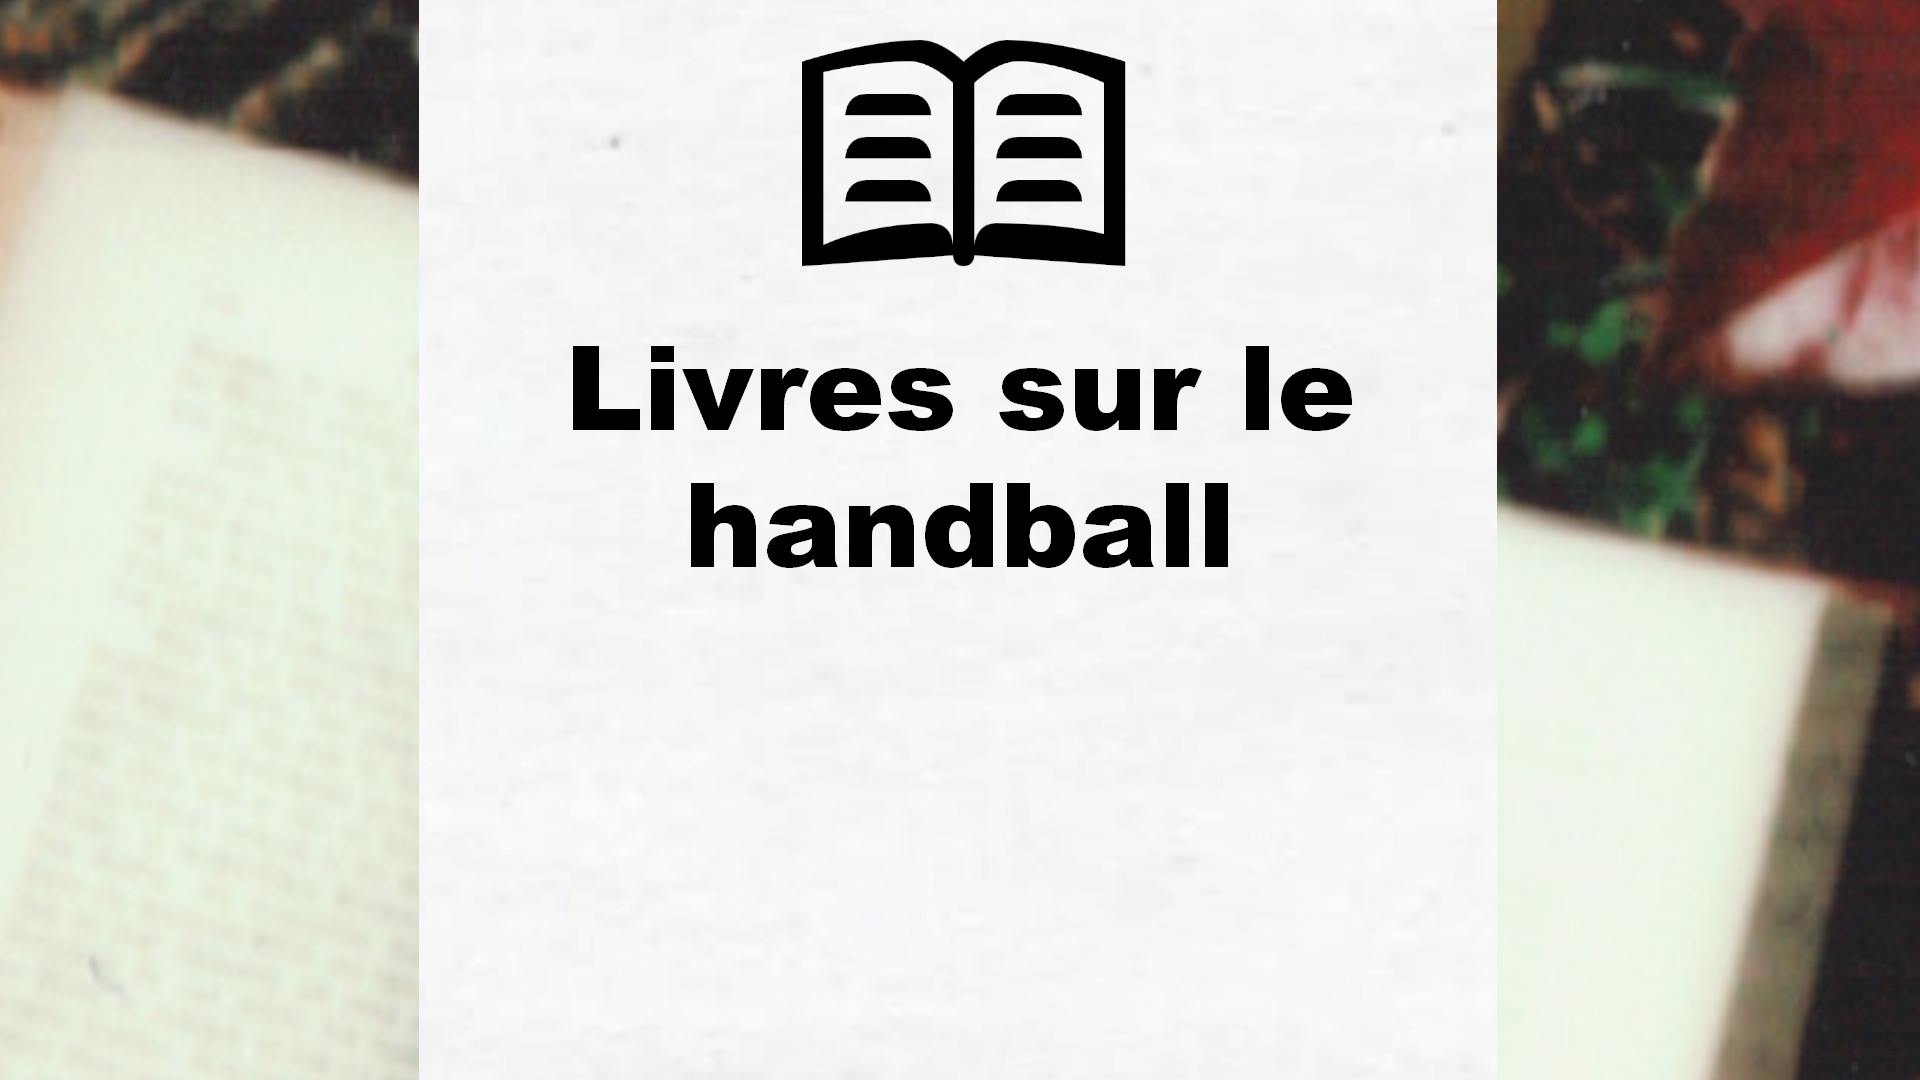 Livres sur le handball